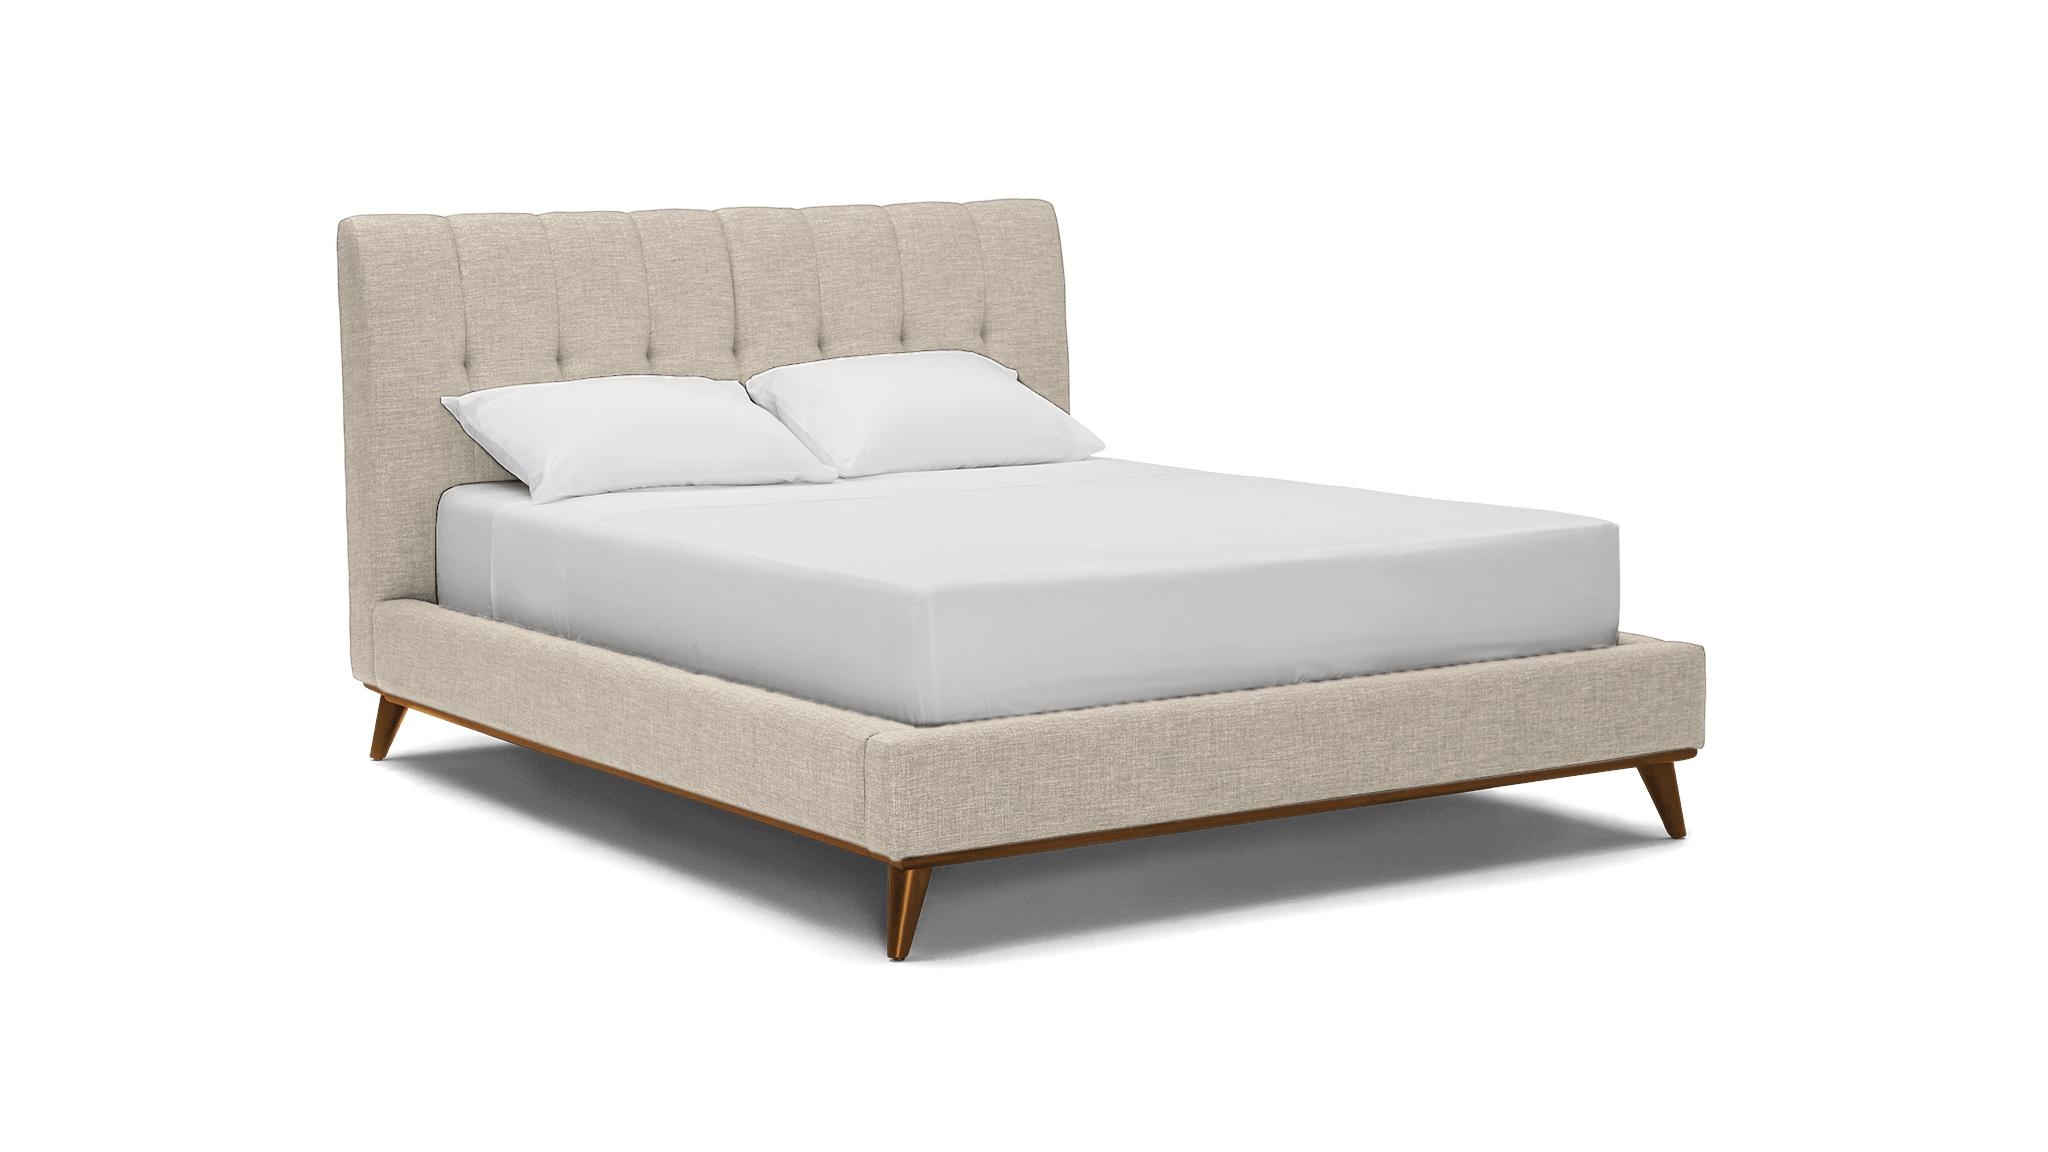 Beige/White Hughes Mid Century Modern Bed - Cody Sandstone - Mocha - Eastern King - Image 1